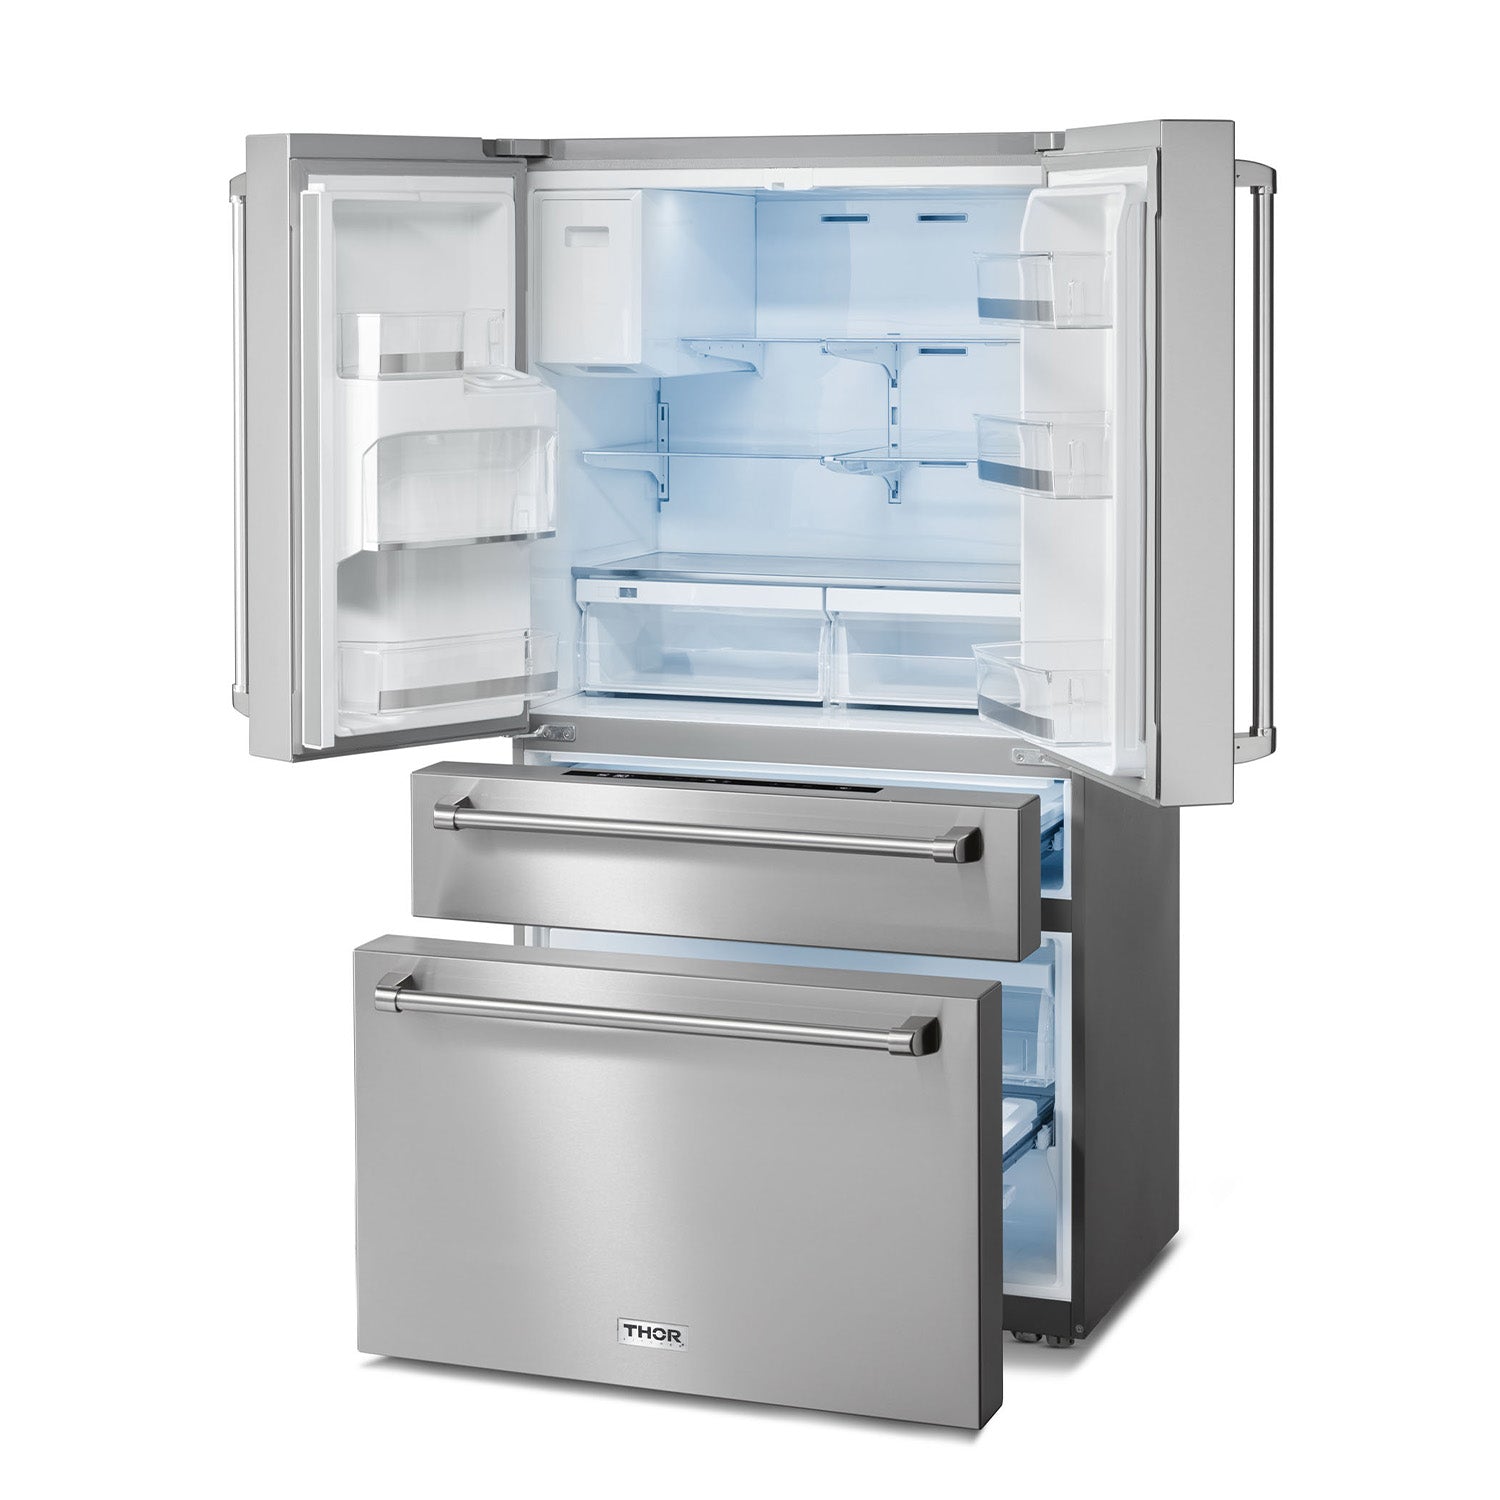 36" Professional French Door Refrigerator with Ice & Water Dispenser TRF3601FD - RenoShop